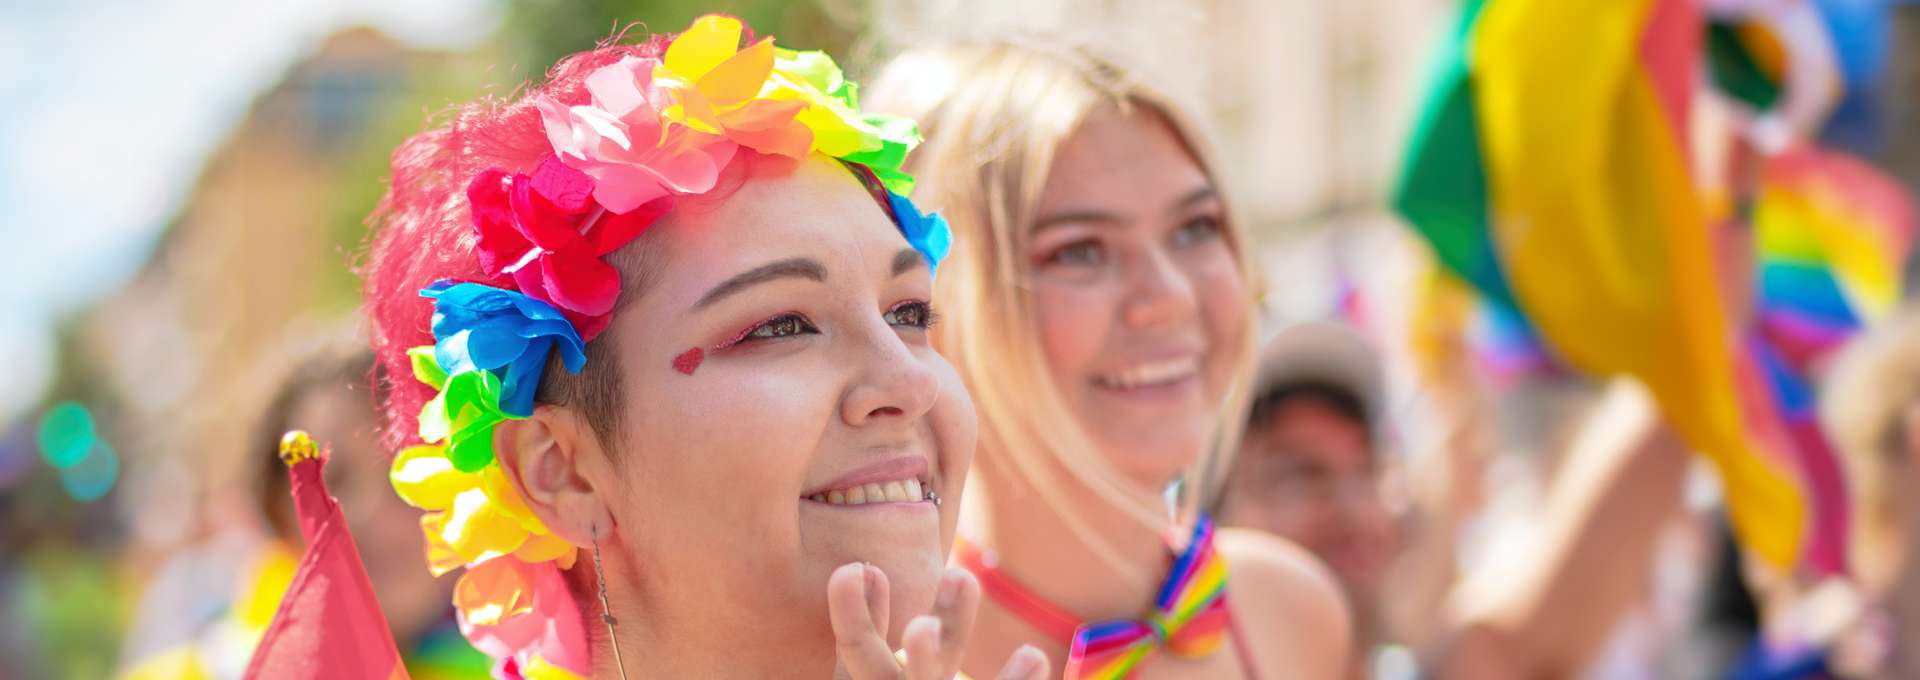 Glada människor i pridekläder